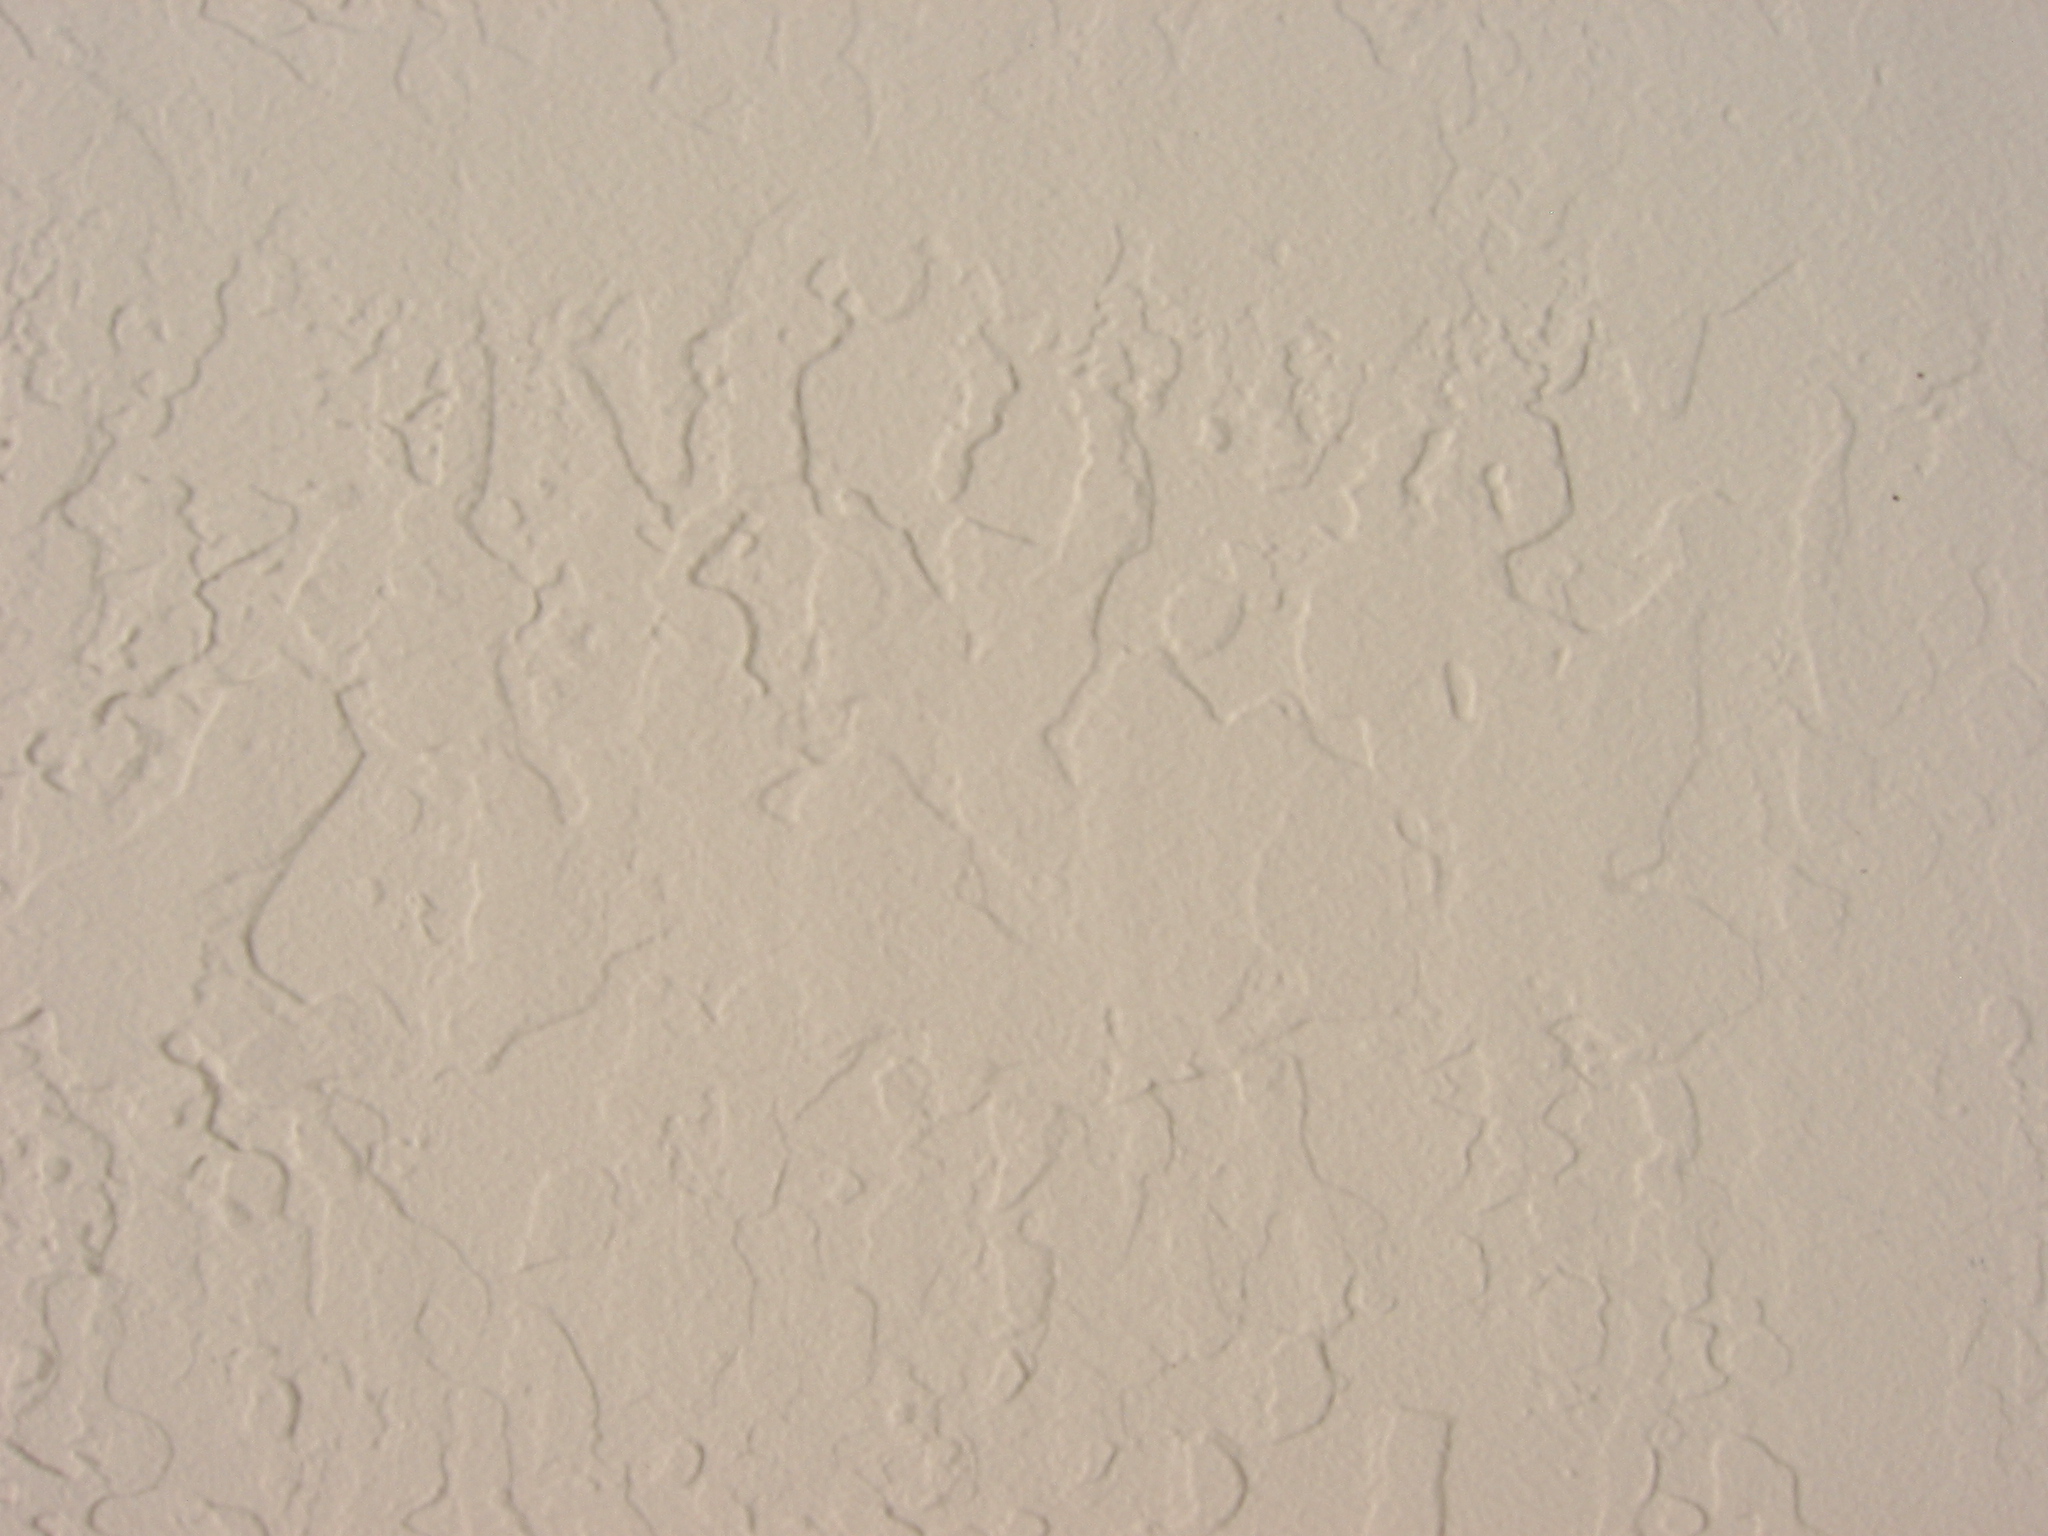 Drywall Texture Samples Ne Jp Asahi American Paint